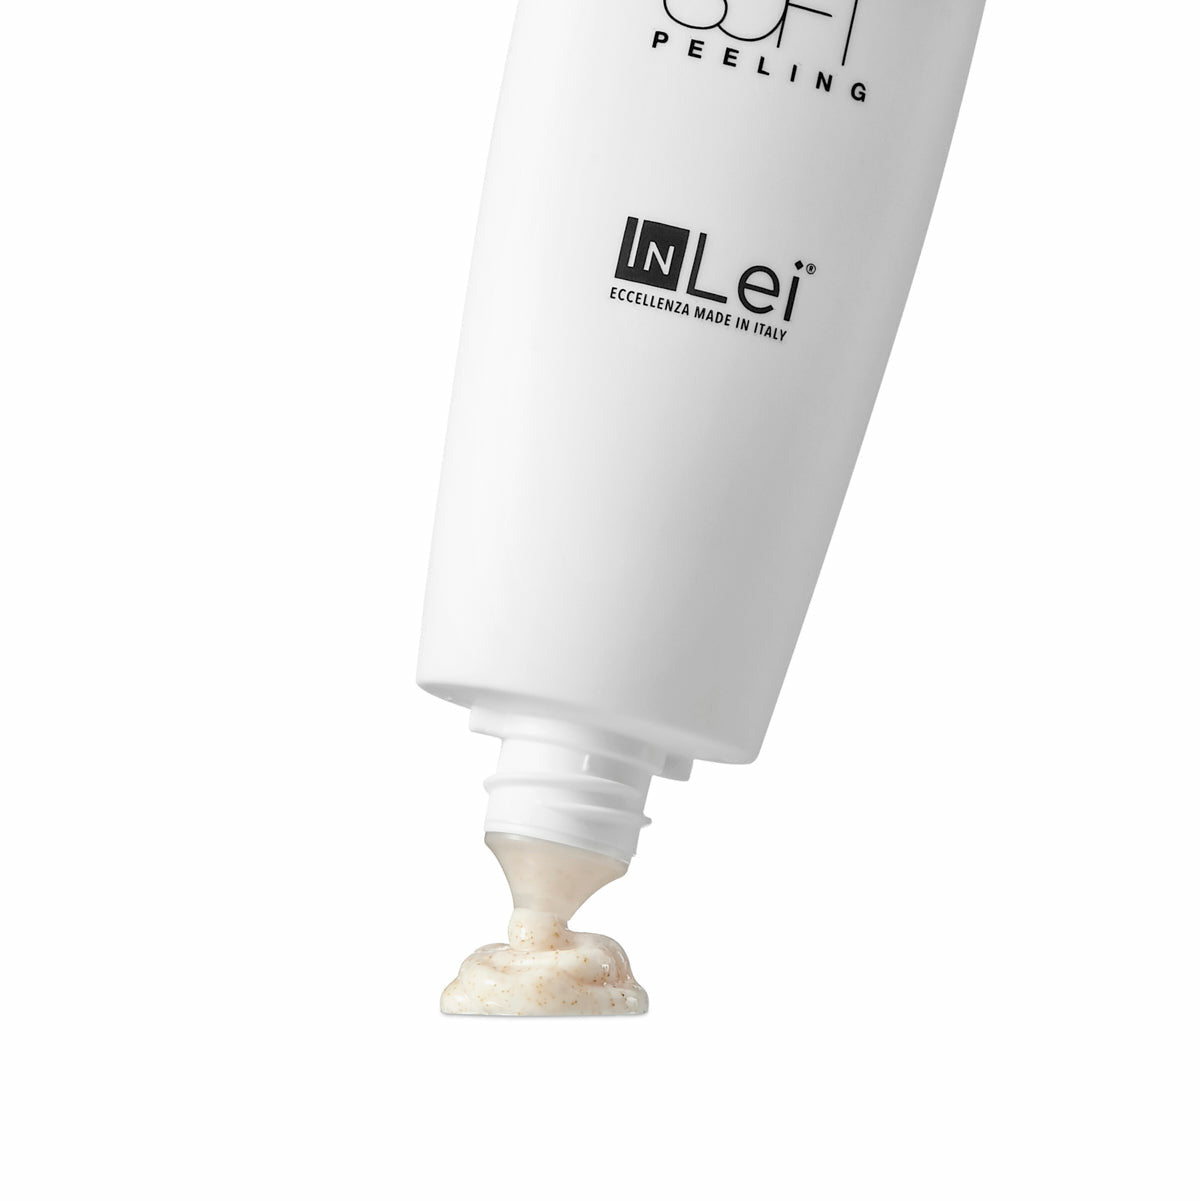 InLei® | Soft Peeling (Exfoliating Cleanser)